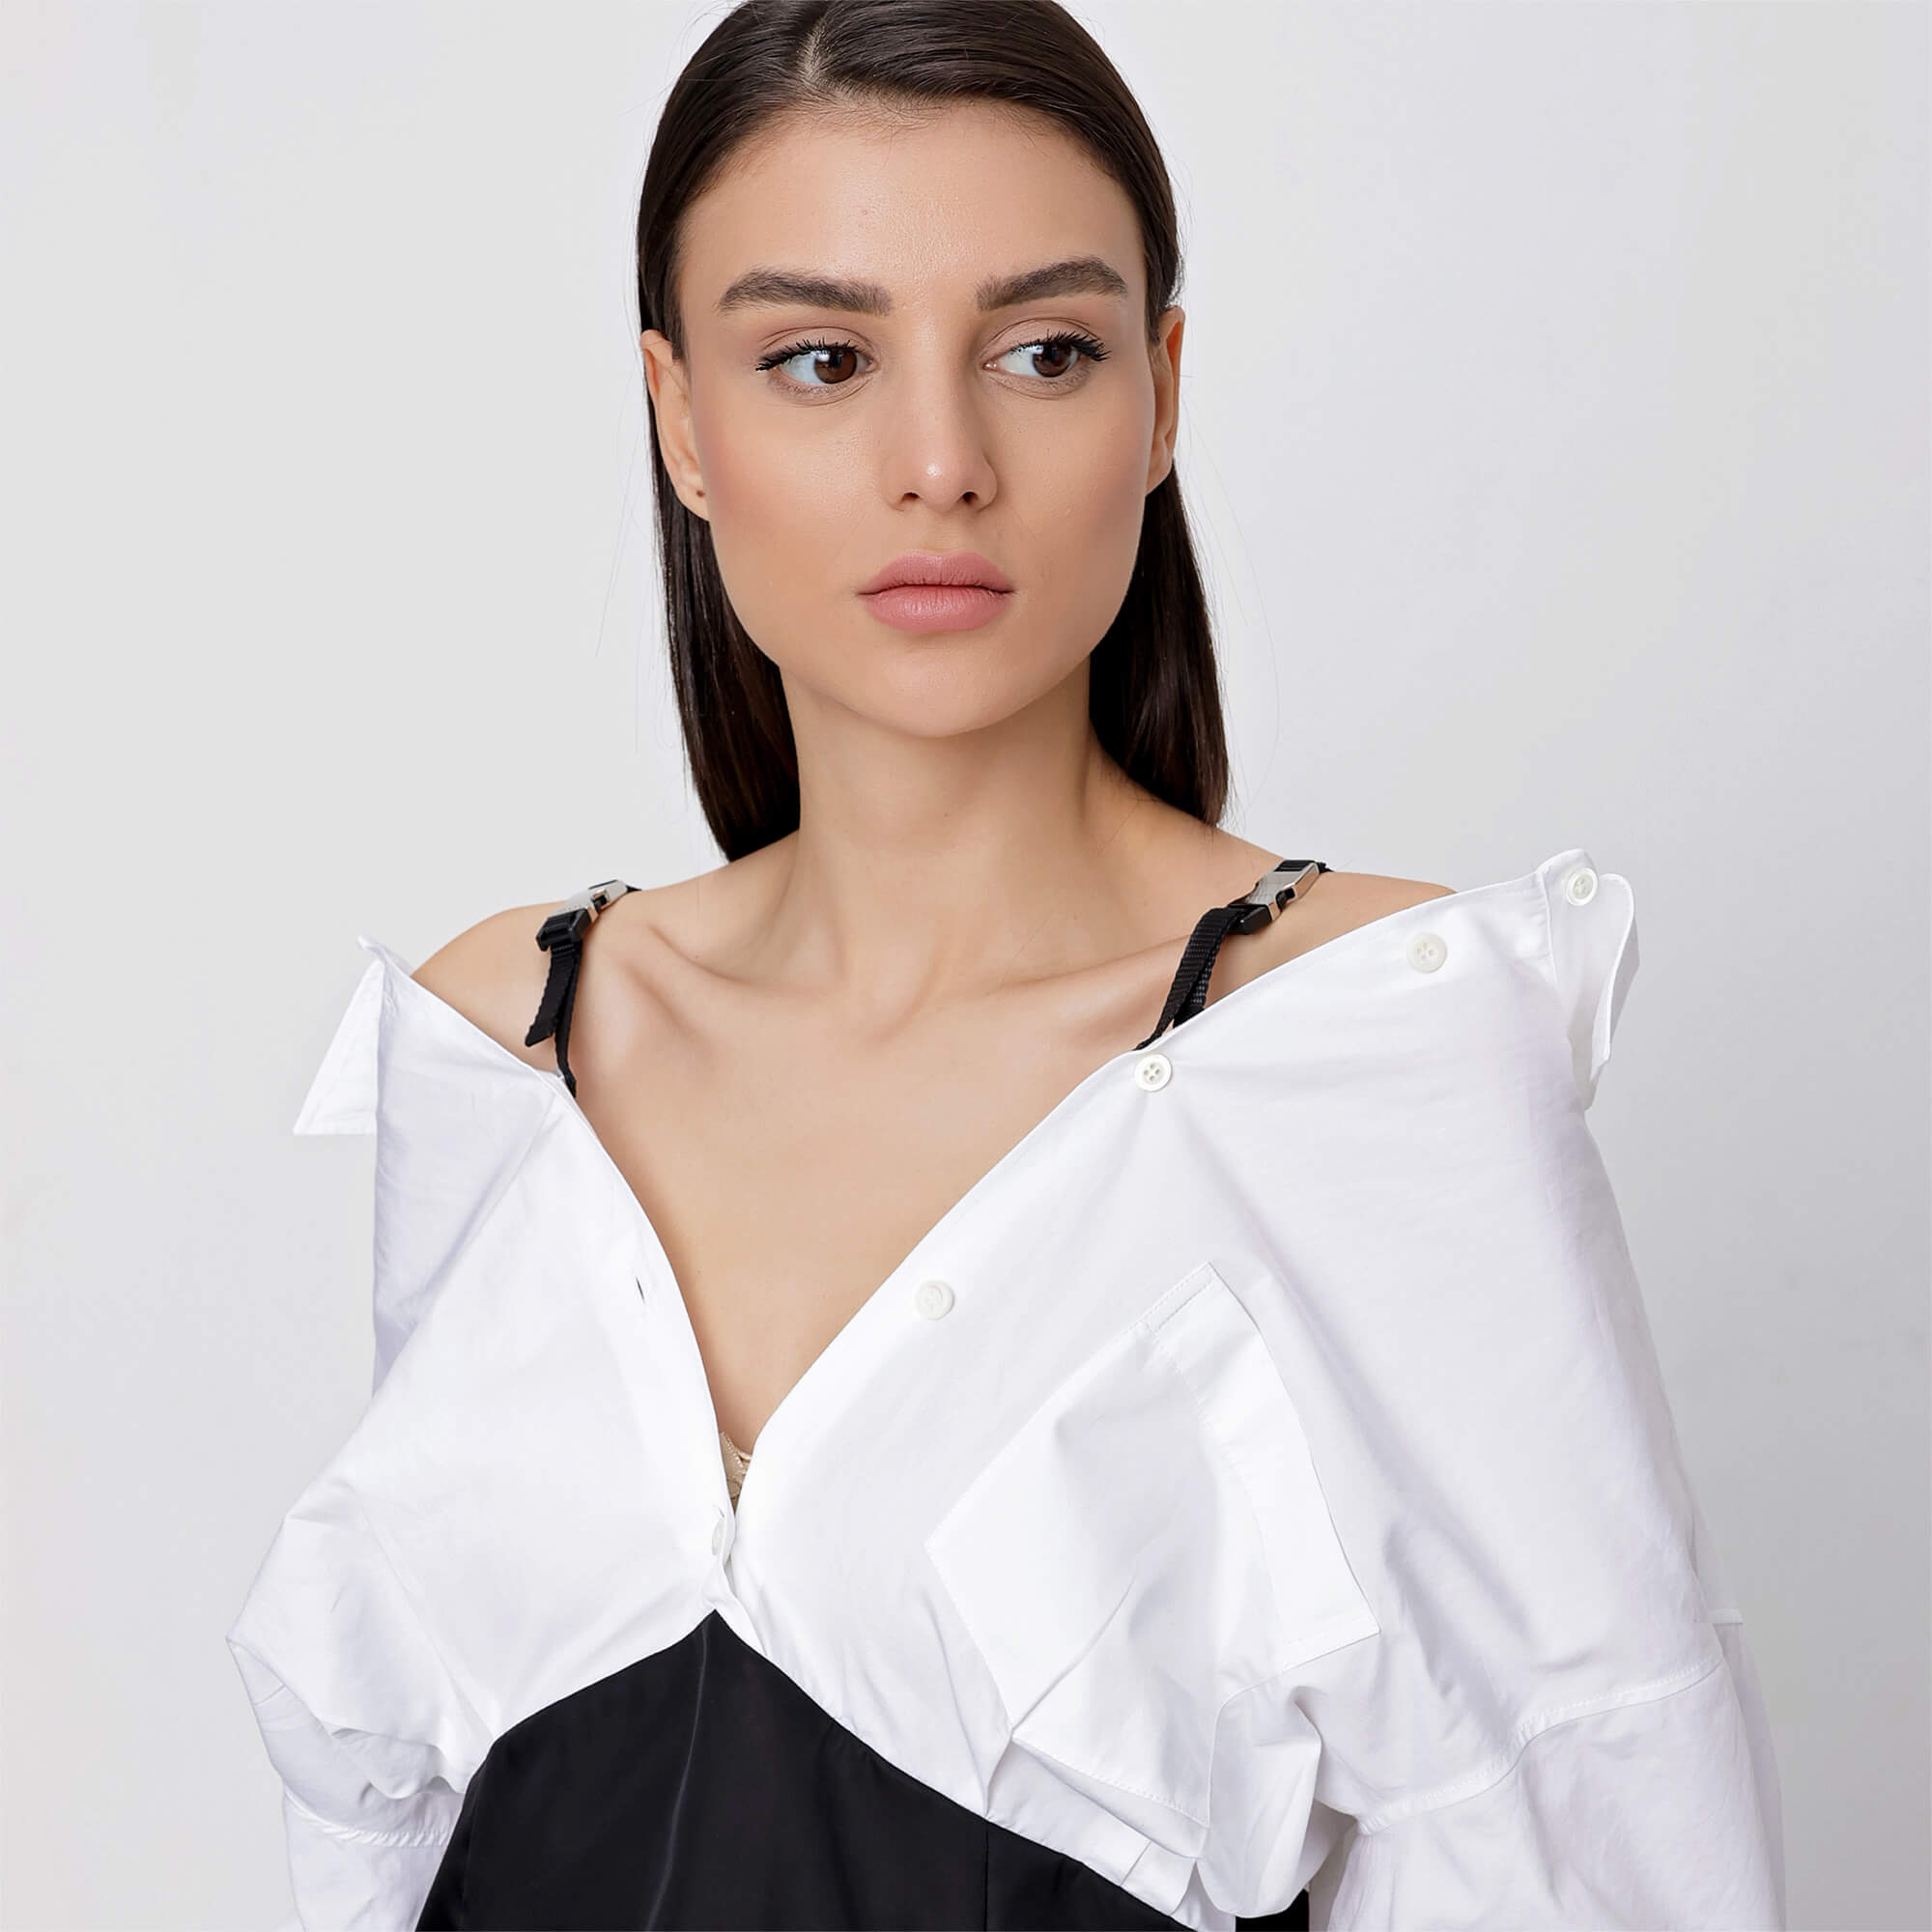 Prada - Black&White Low Shoulder Mini Shirt Dress